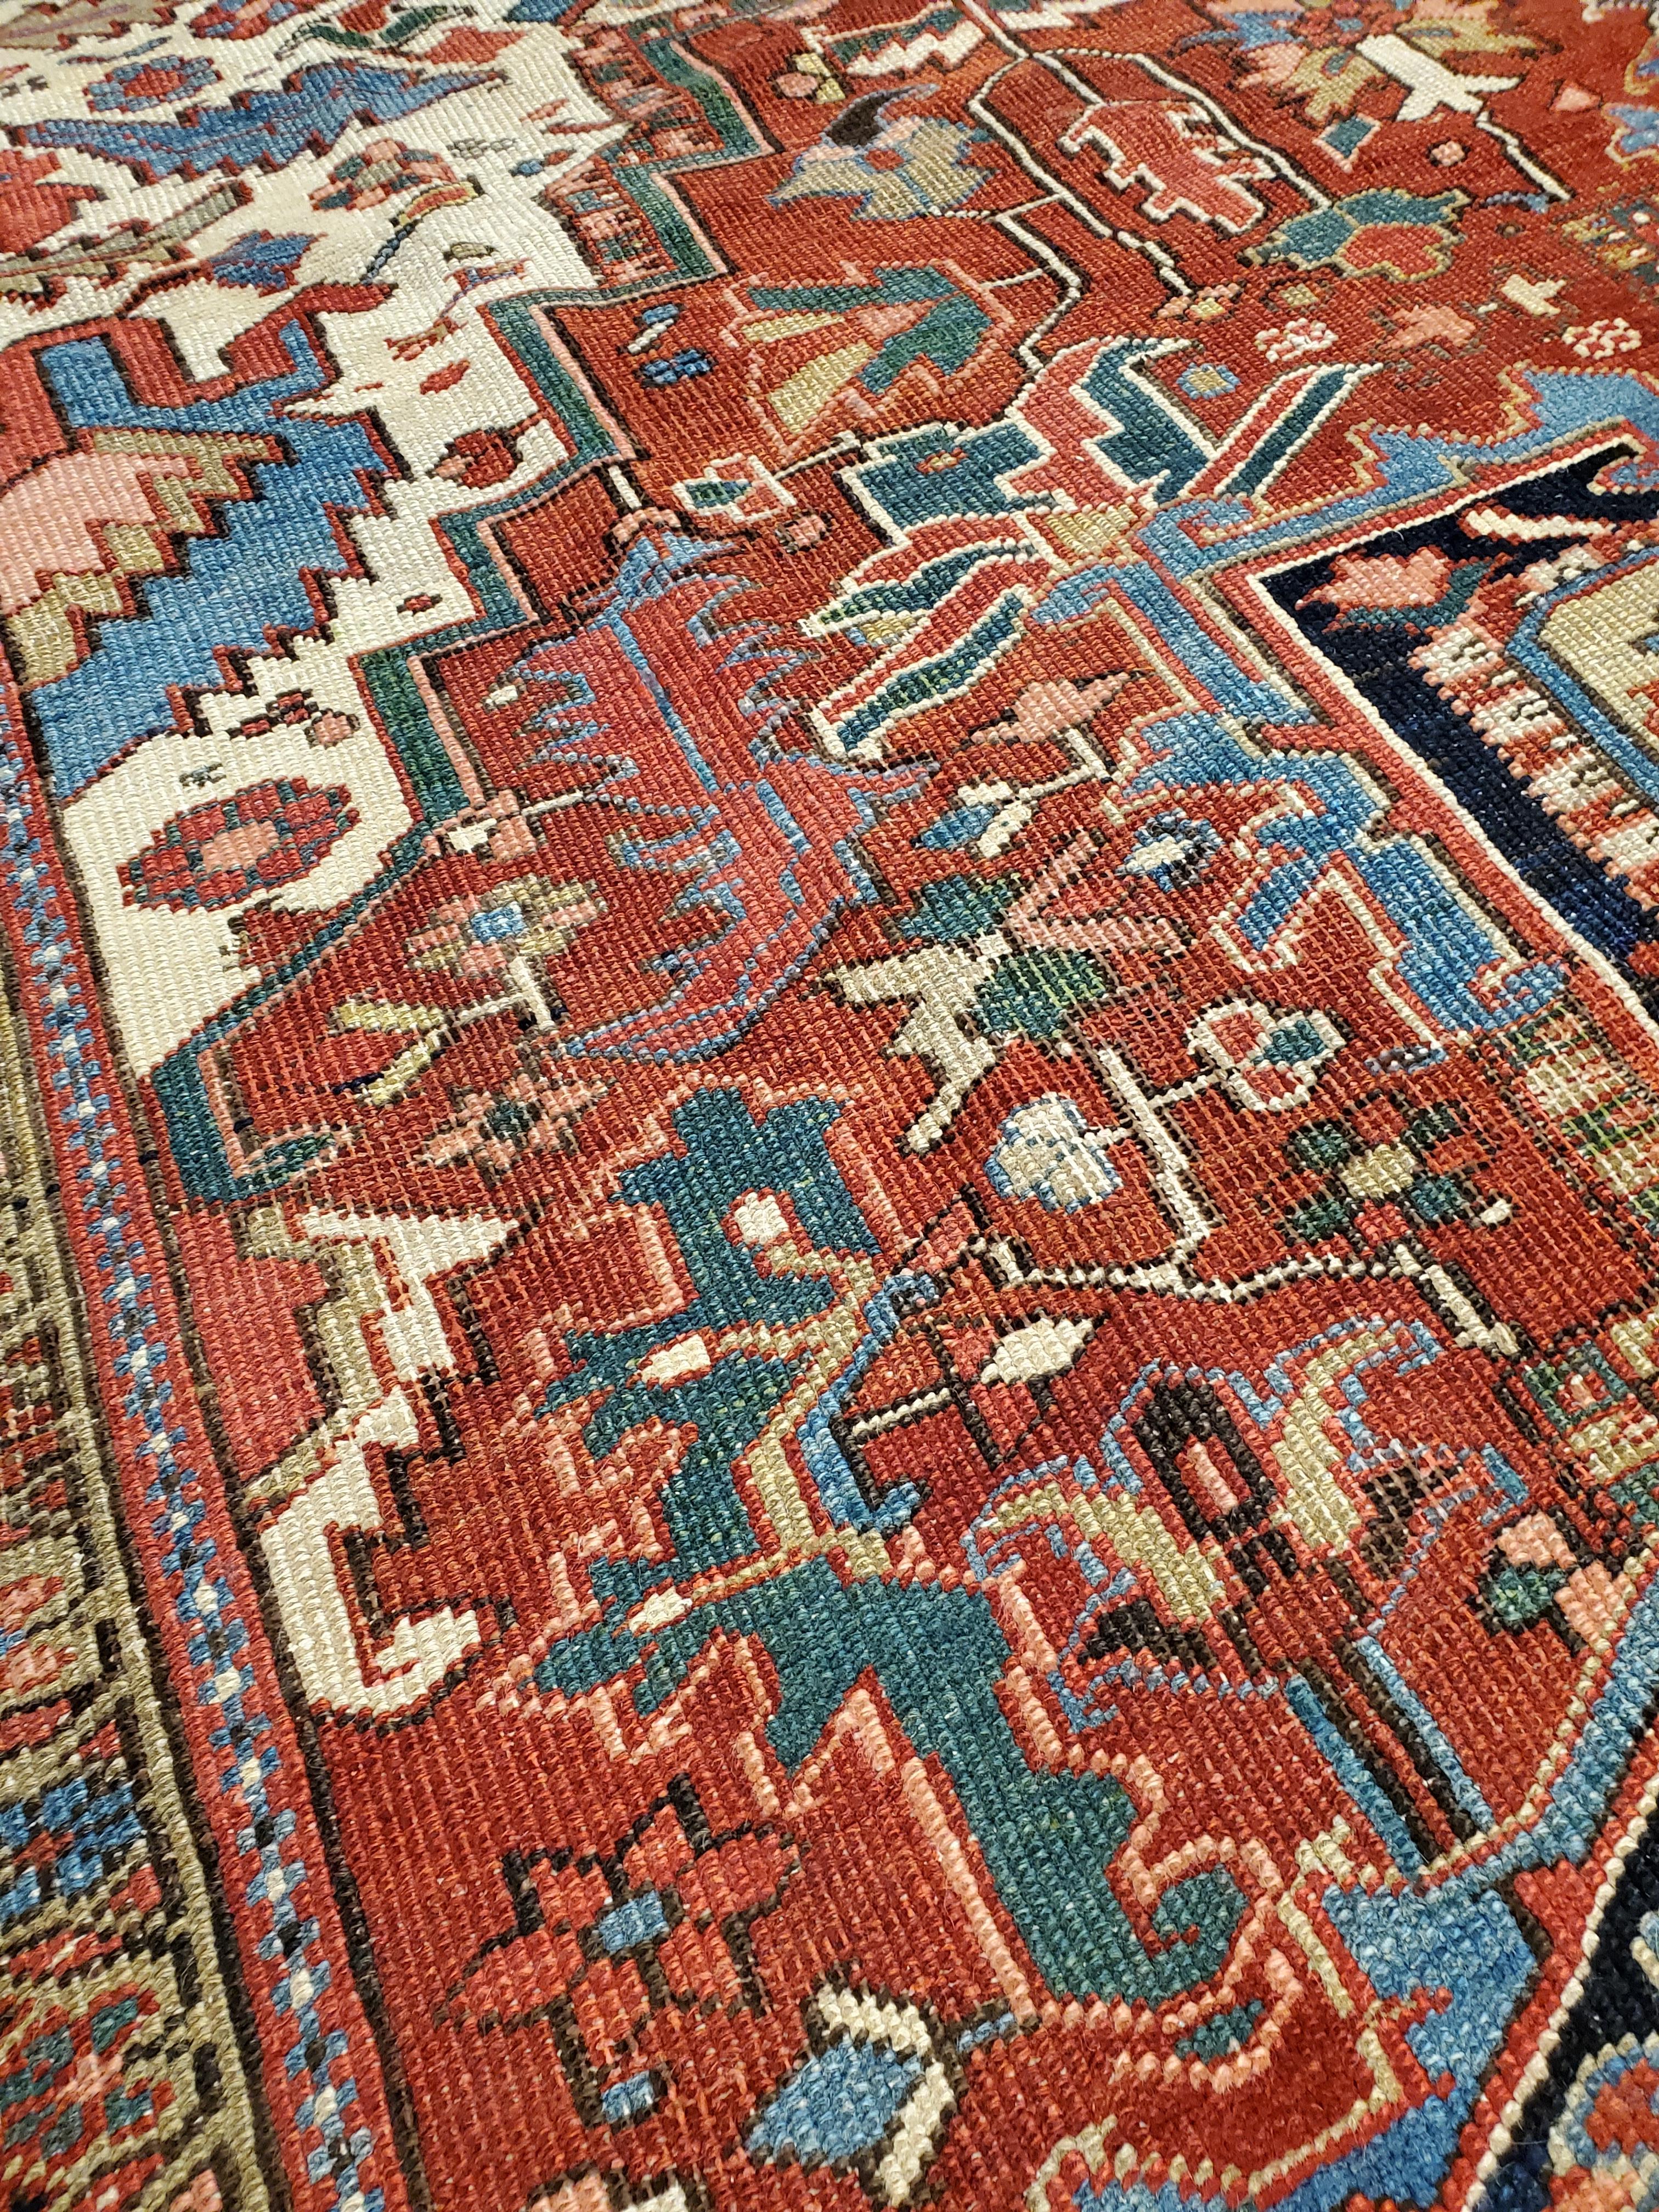 Antique Persian Heriz Carpet, Handmade Wool Oriental Rug, Rust, Navy, Lt Blue For Sale 4